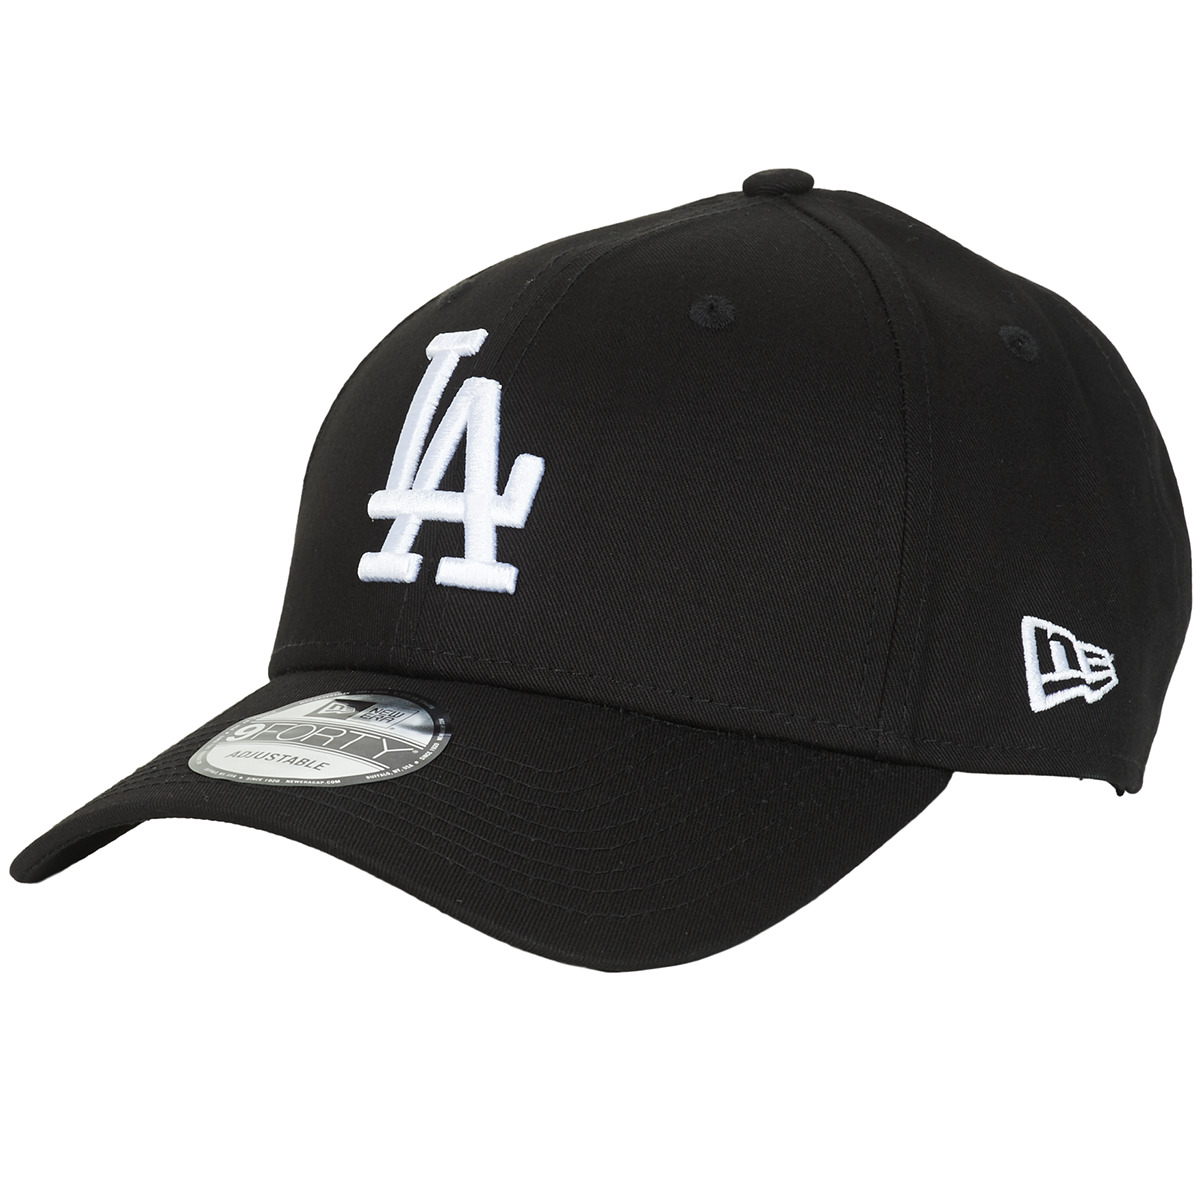 Clothes accessories Caps New-Era LEAGUE ESSENTIAL 9FORTY LOS ANGELES DODGERS Black / White